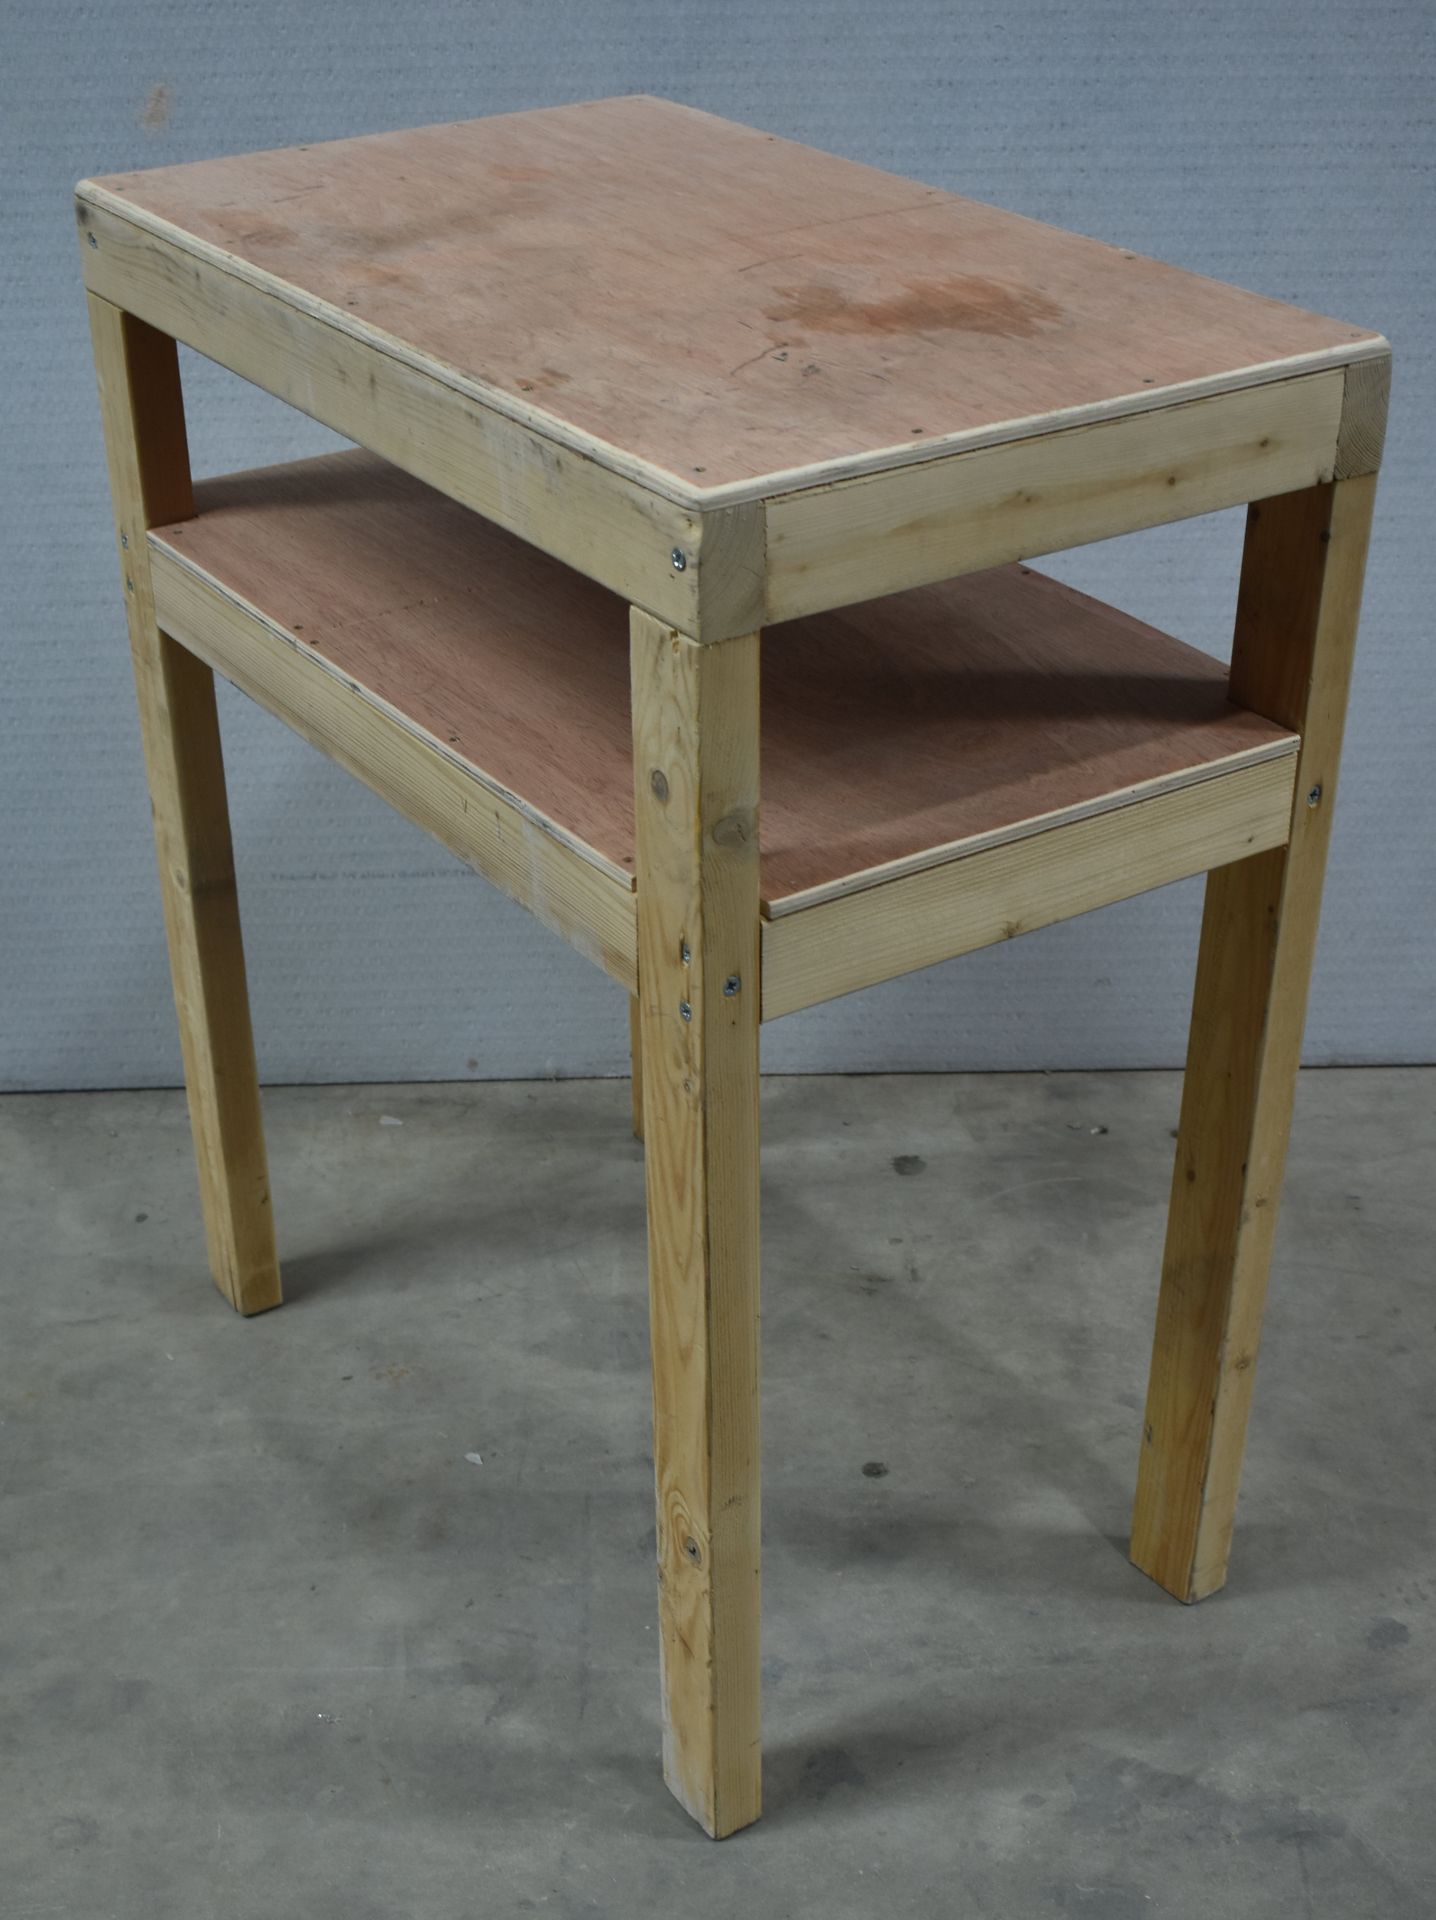 1 x Small Wooden Workbench - 75(w) x 42(d) x 89(h) cm - Ref: K286 - CL905 - Location: Altrincham - Image 2 of 10